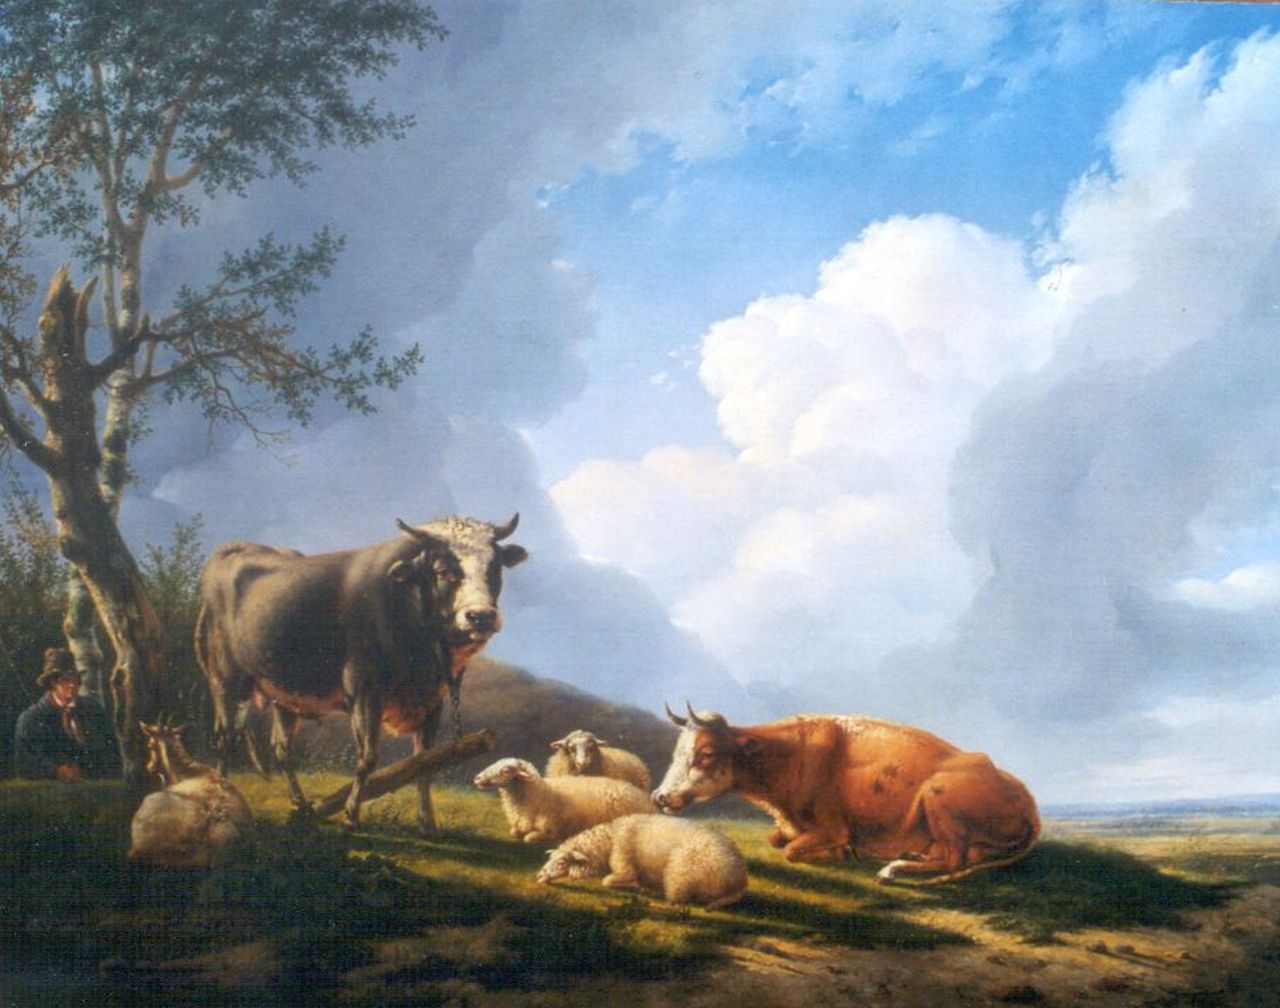 Hagenbeek Ch.  | Charles Hagenbeek, Rustend vee met herder, olieverf op doek 89,2 x 118,7 cm, gesigneerd met monogram op stier en op boomstam